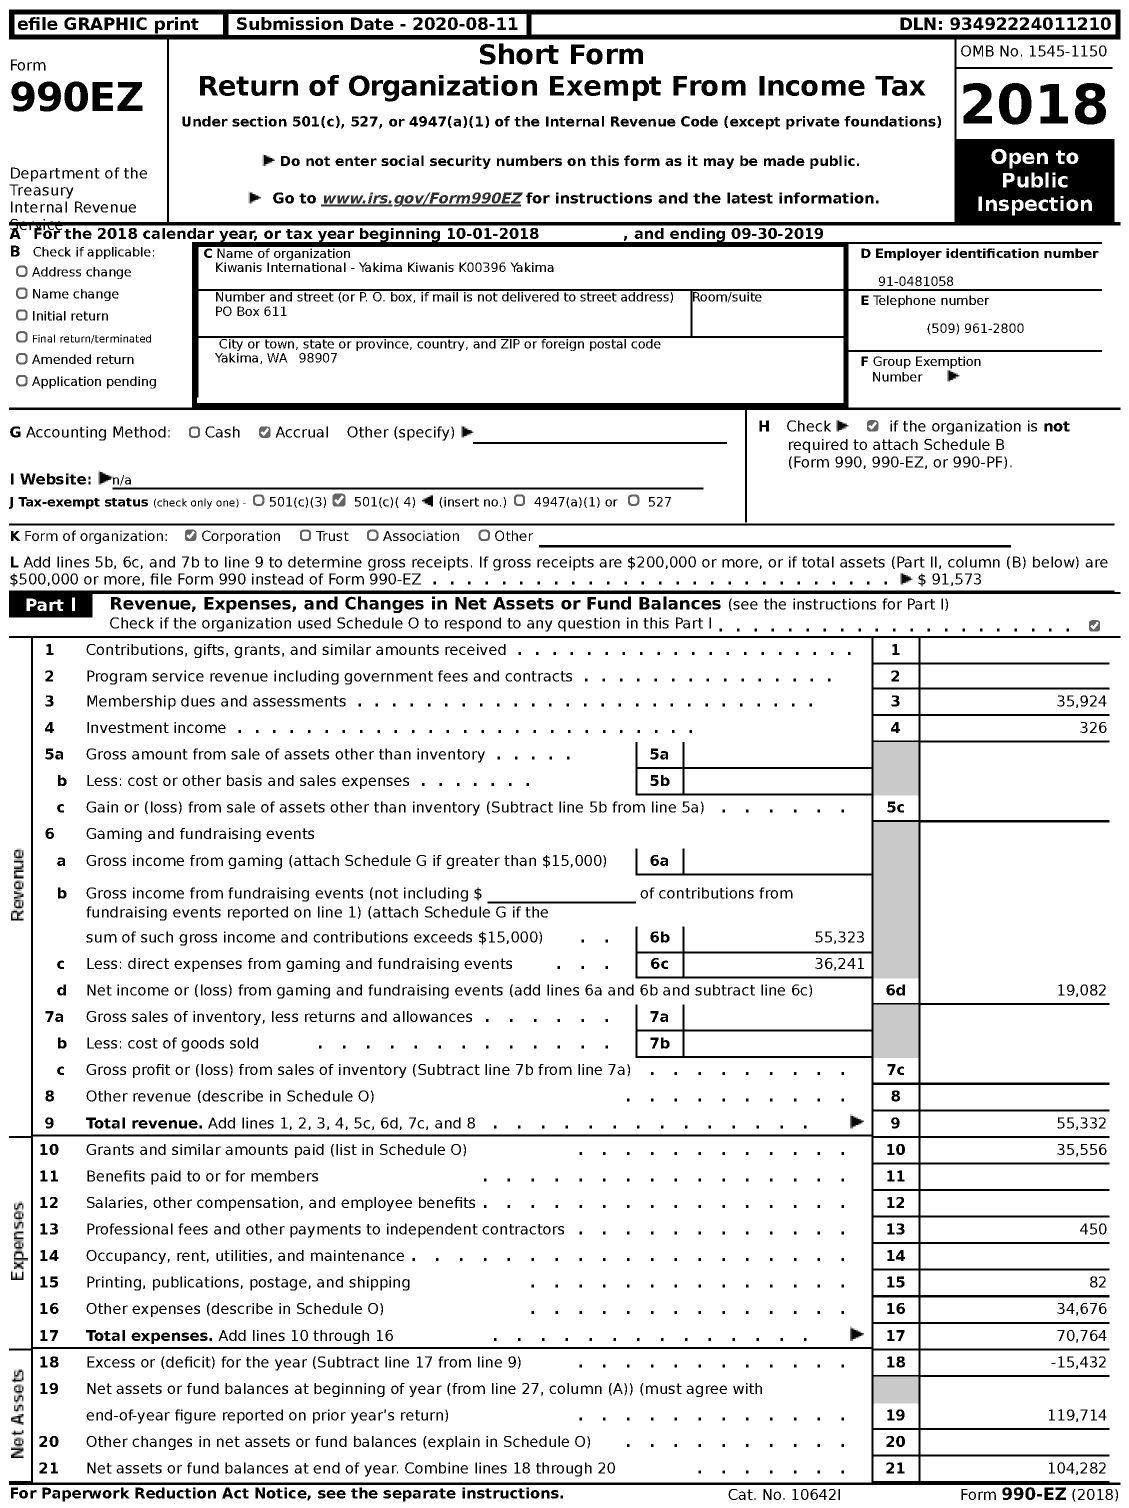 Image of first page of 2018 Form 990EZ for Kiwanis International - K00396 Yakima